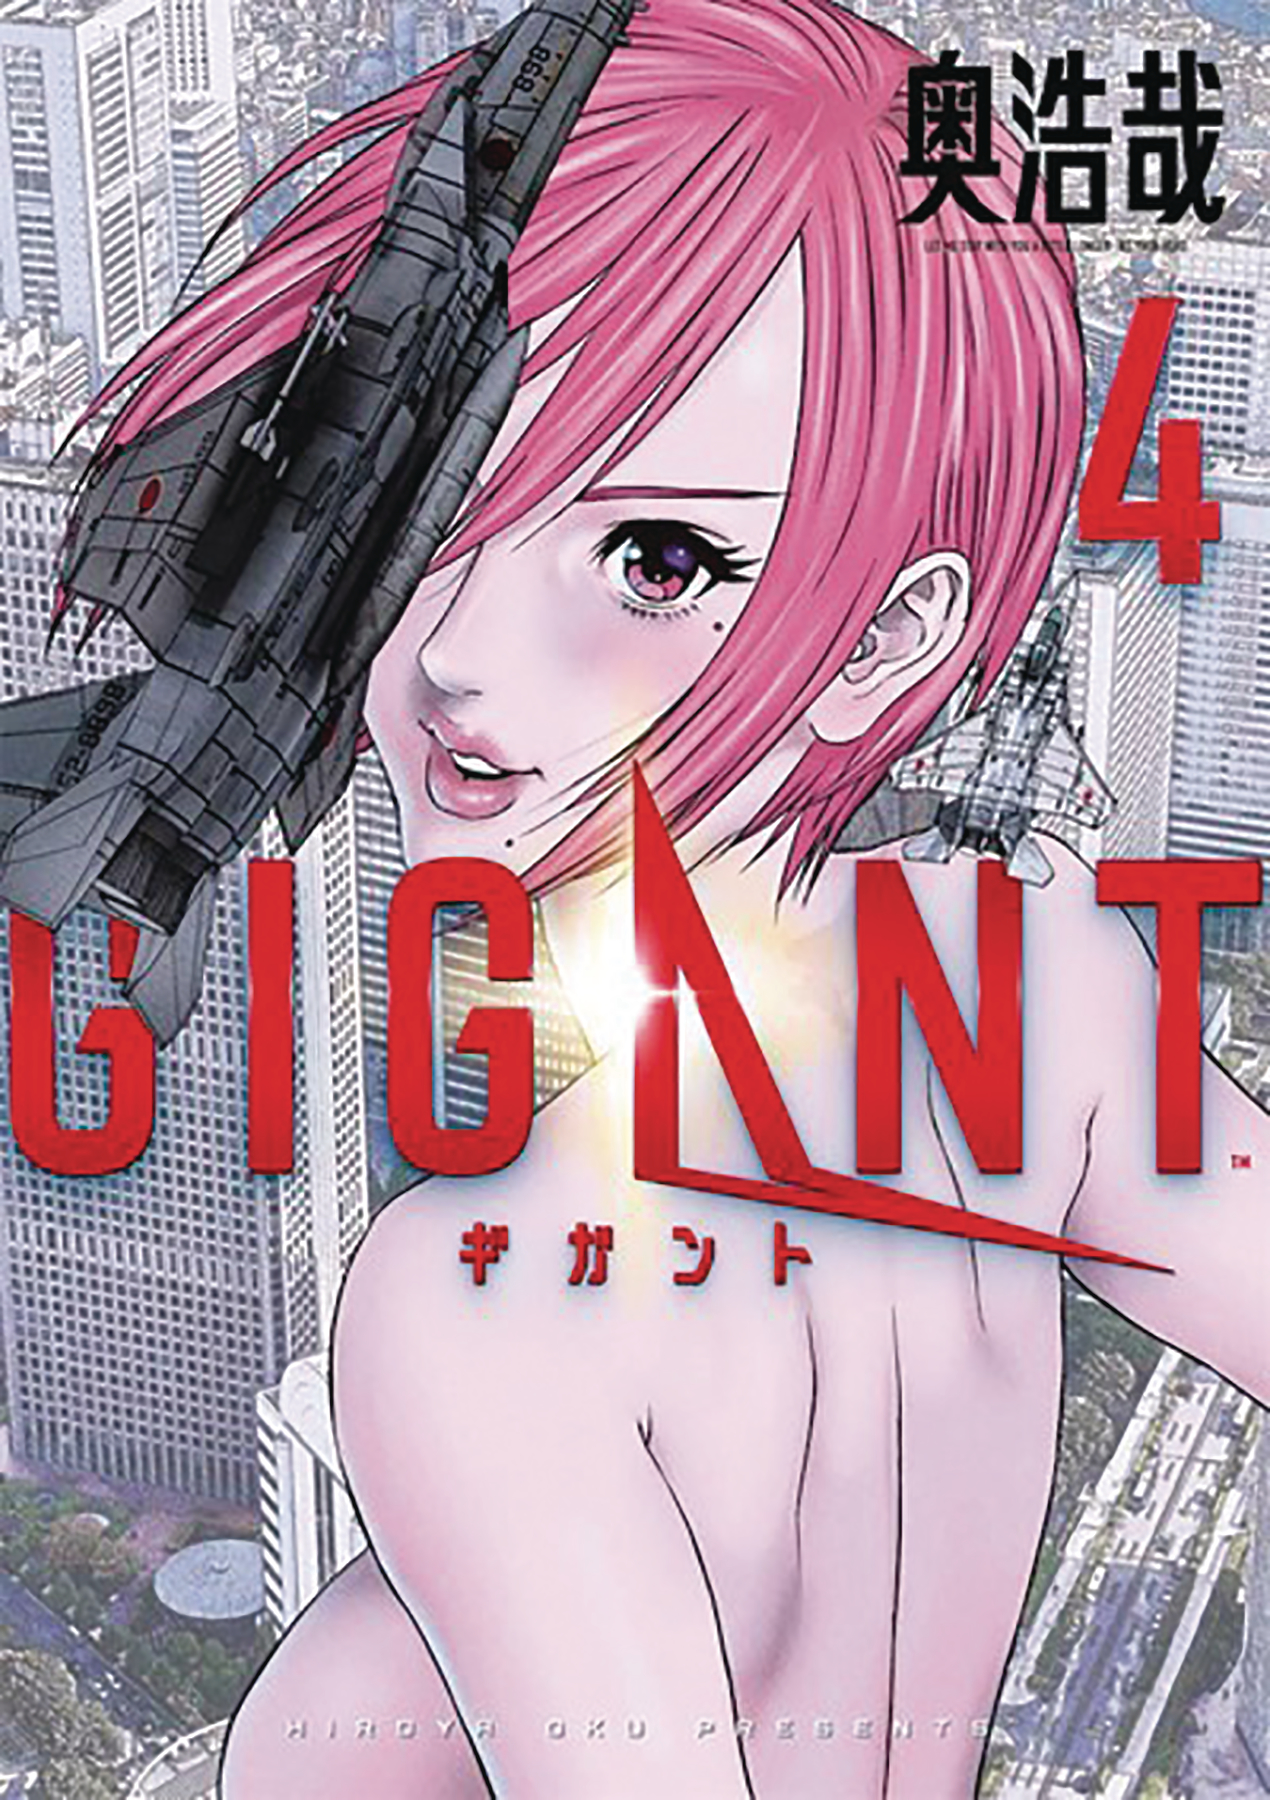 Gigant Manga Volume 4 (Mature)